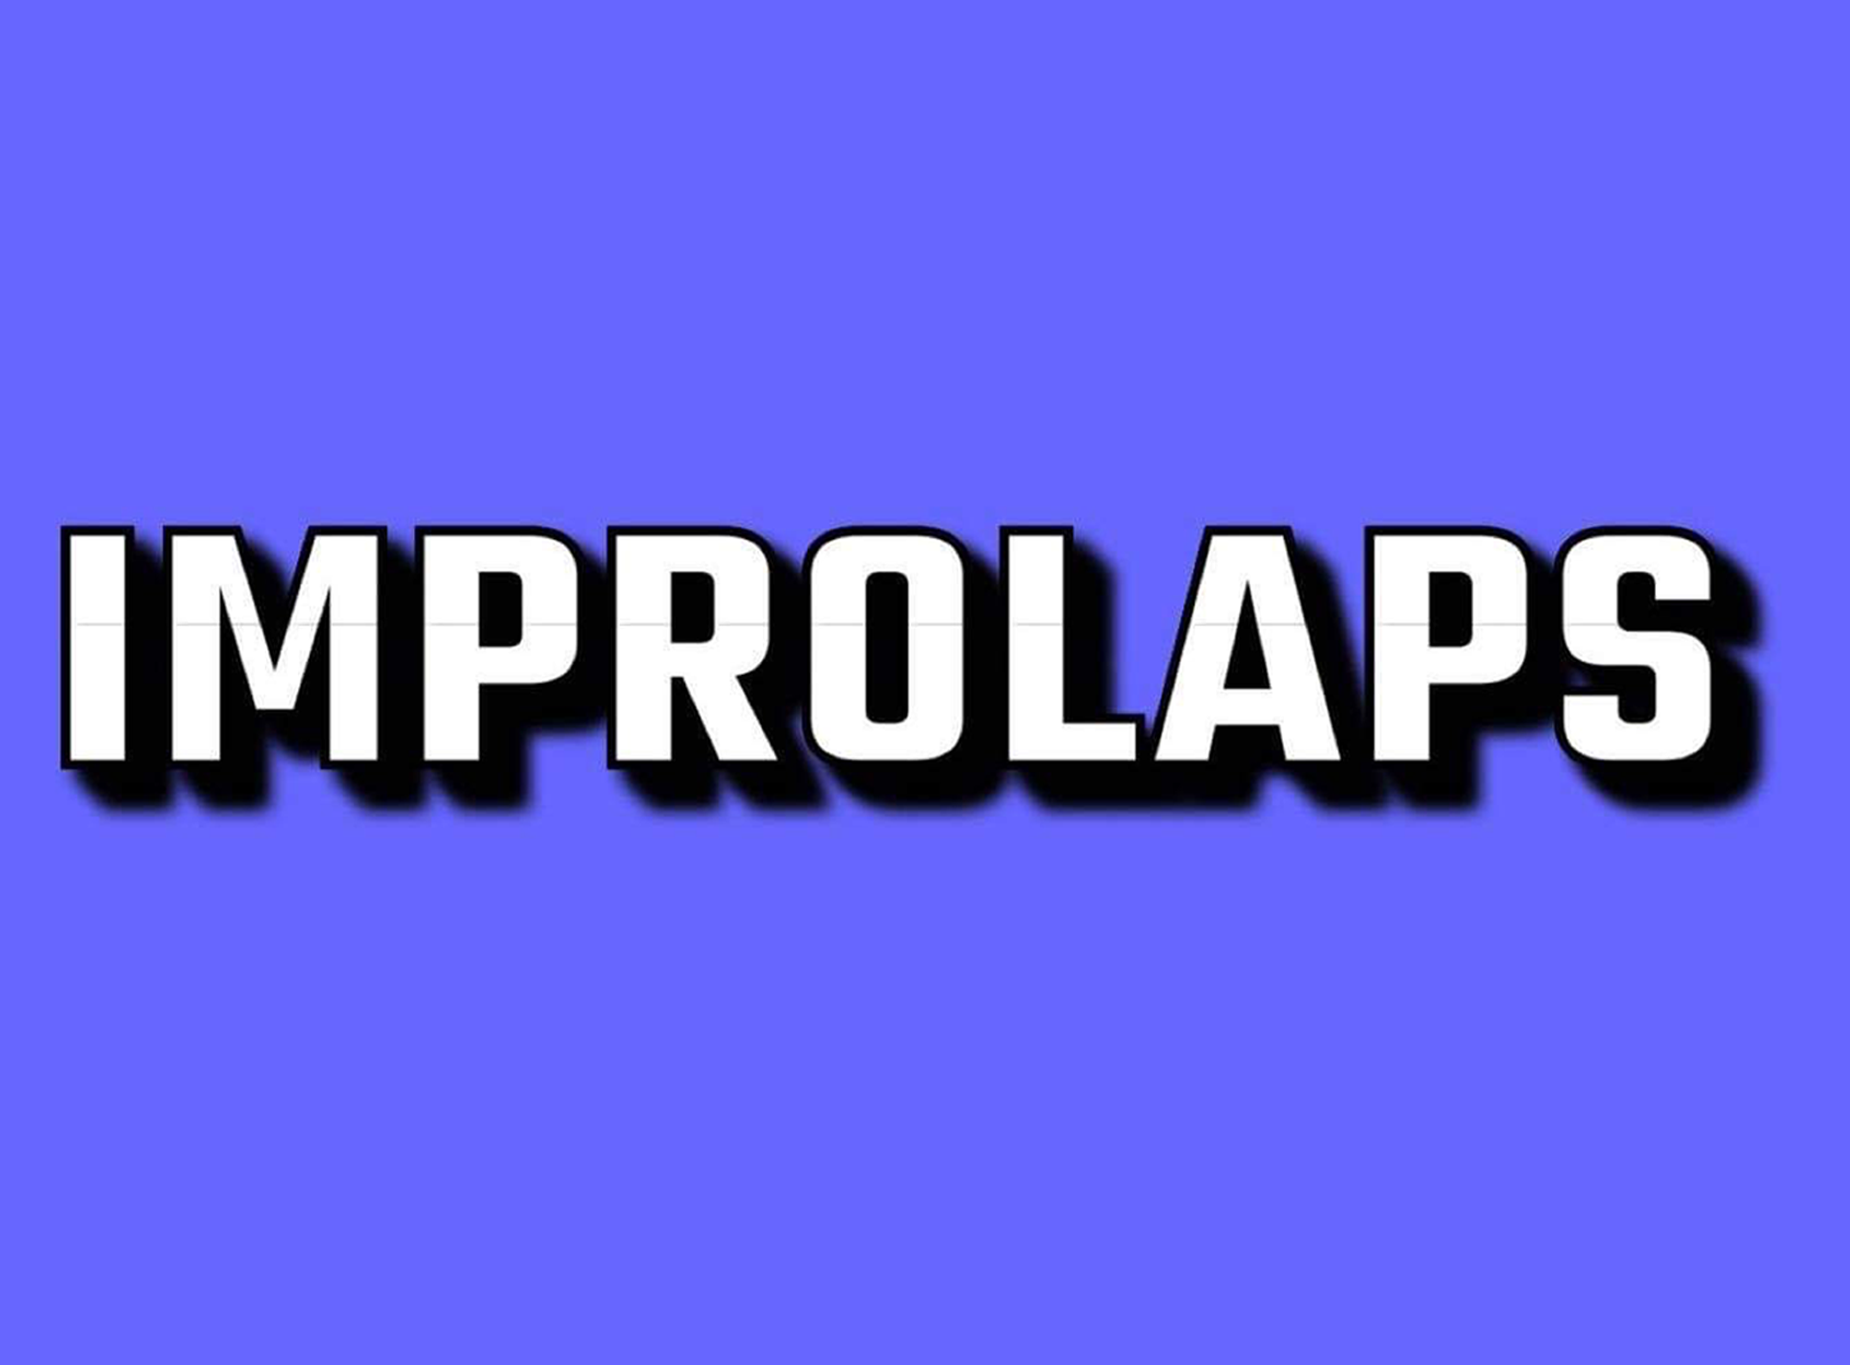 Improlaps presale information on freepresalepasswords.com